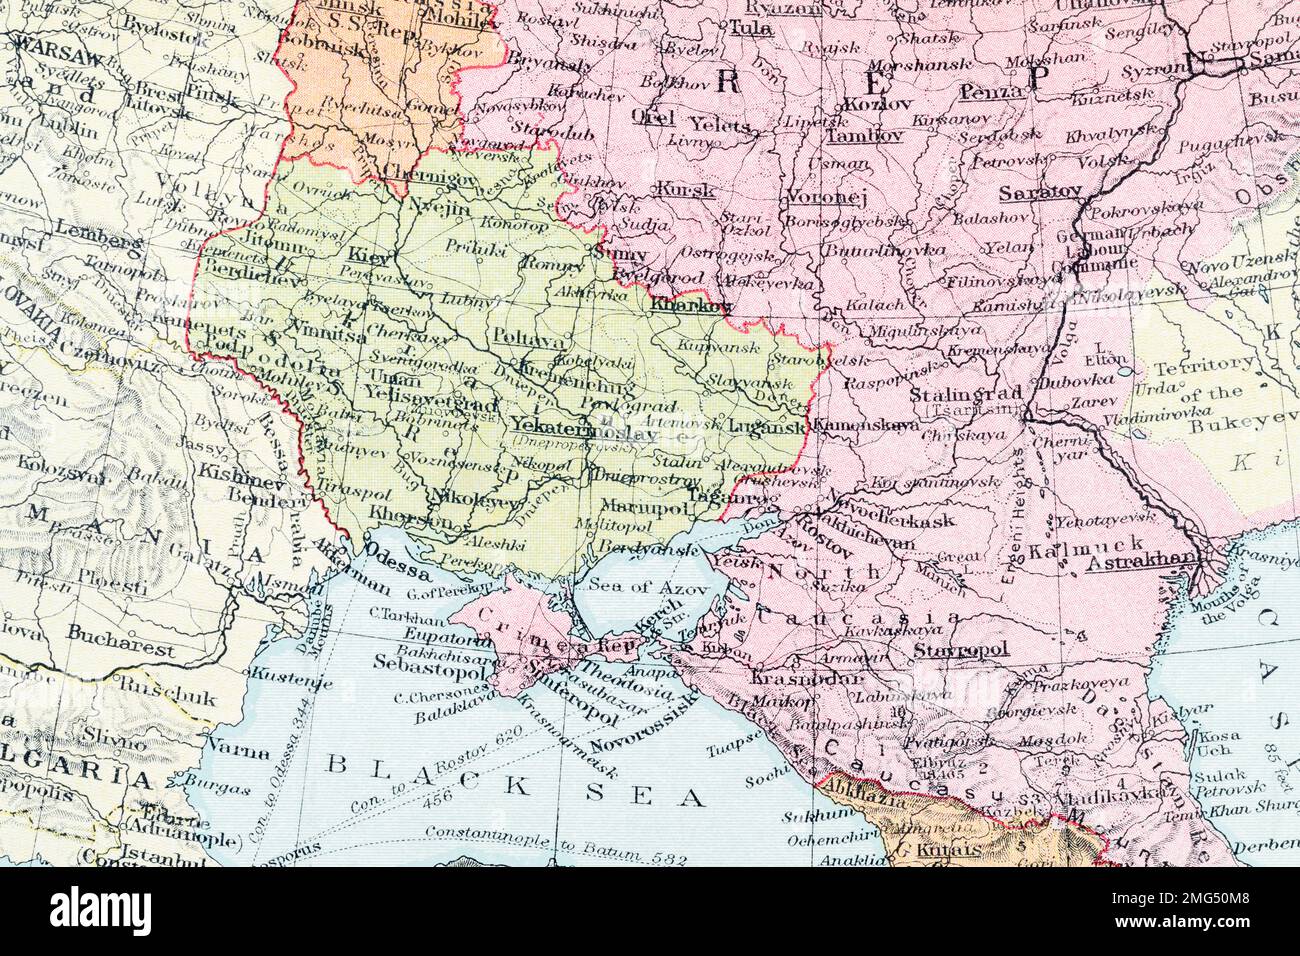 1935 atlas map of territorial boundaries of the Kiev Oblast, Kiev city, Kharkov plus Crimea - pre-WW2 & under Soviet control. Stock Photo